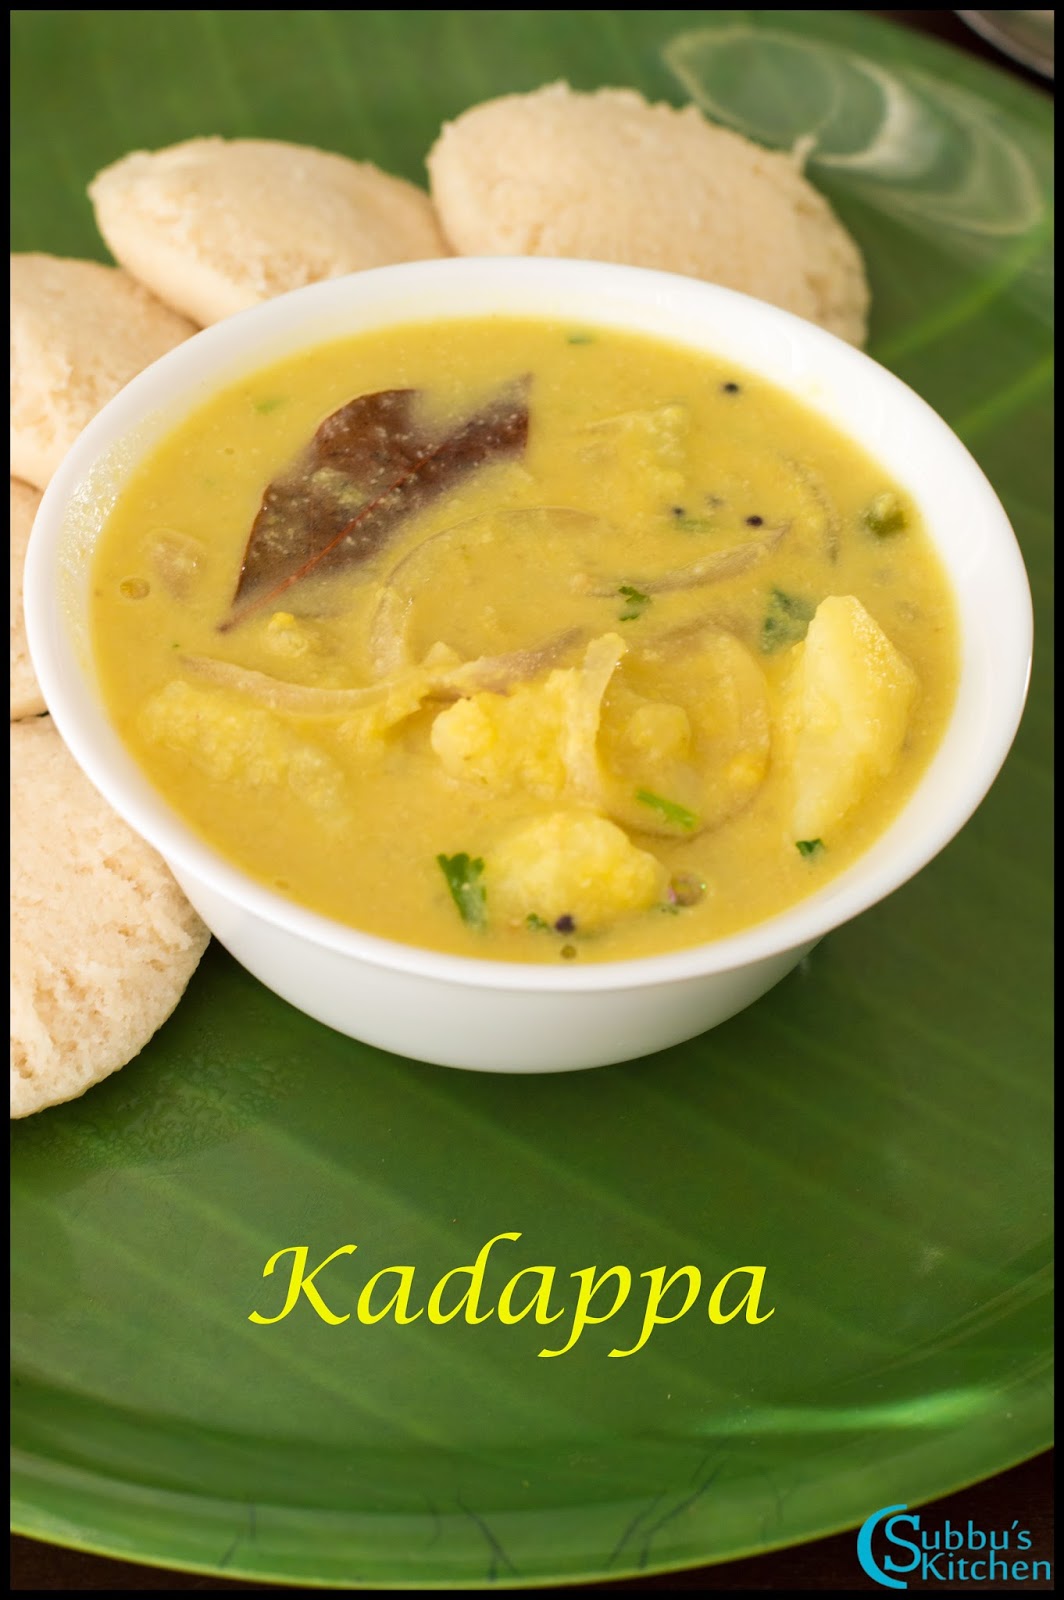 Kadapa / Kadappa - Subbus Kitchen